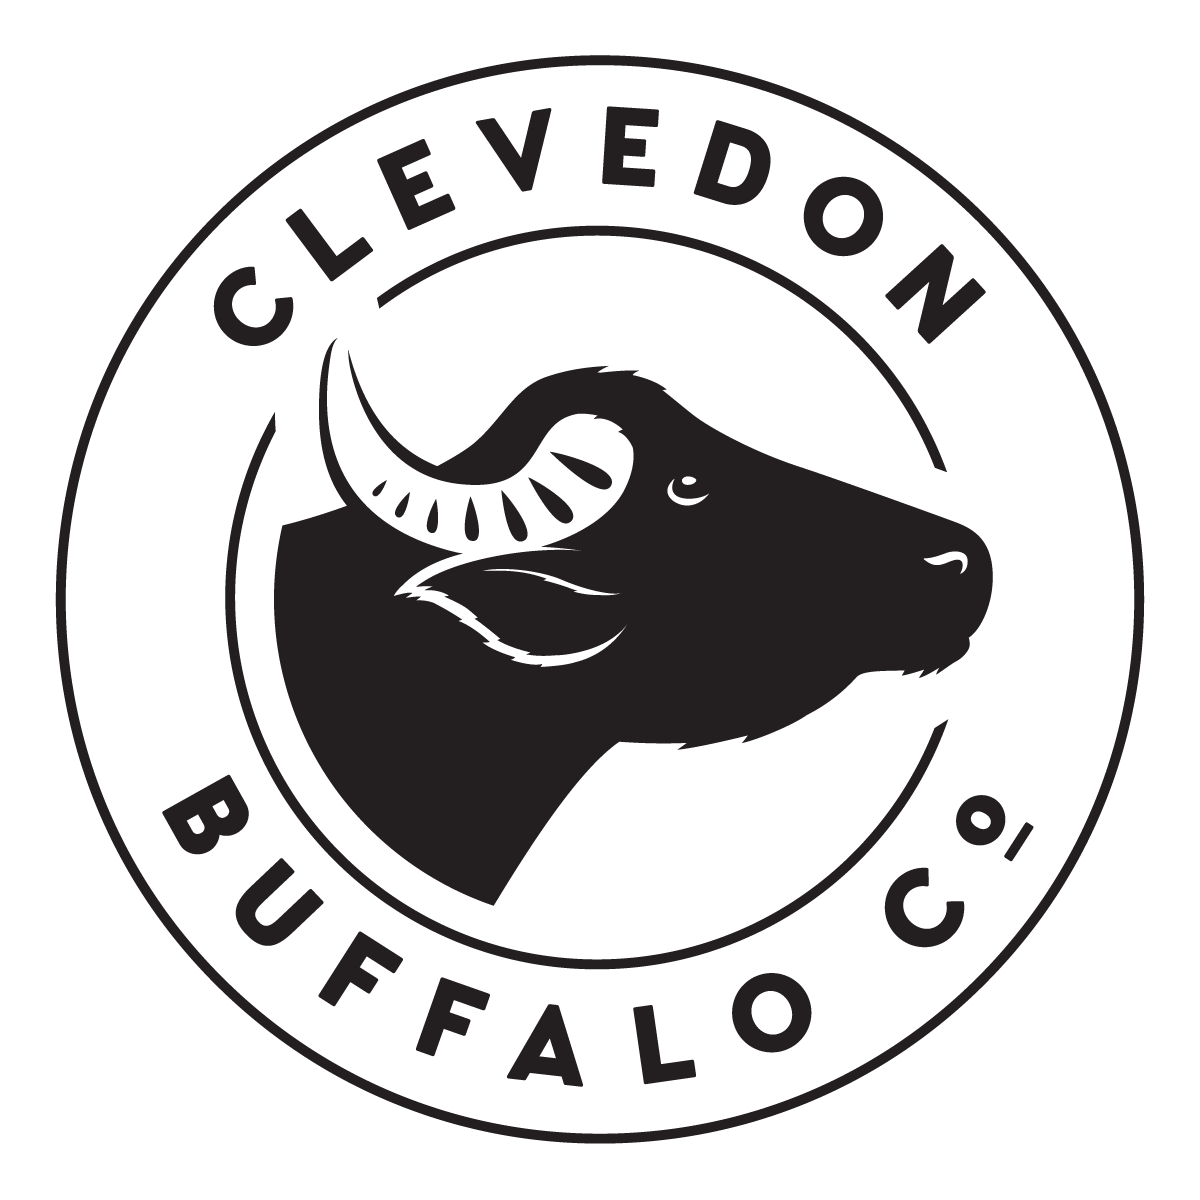 Clevedon Buffalo